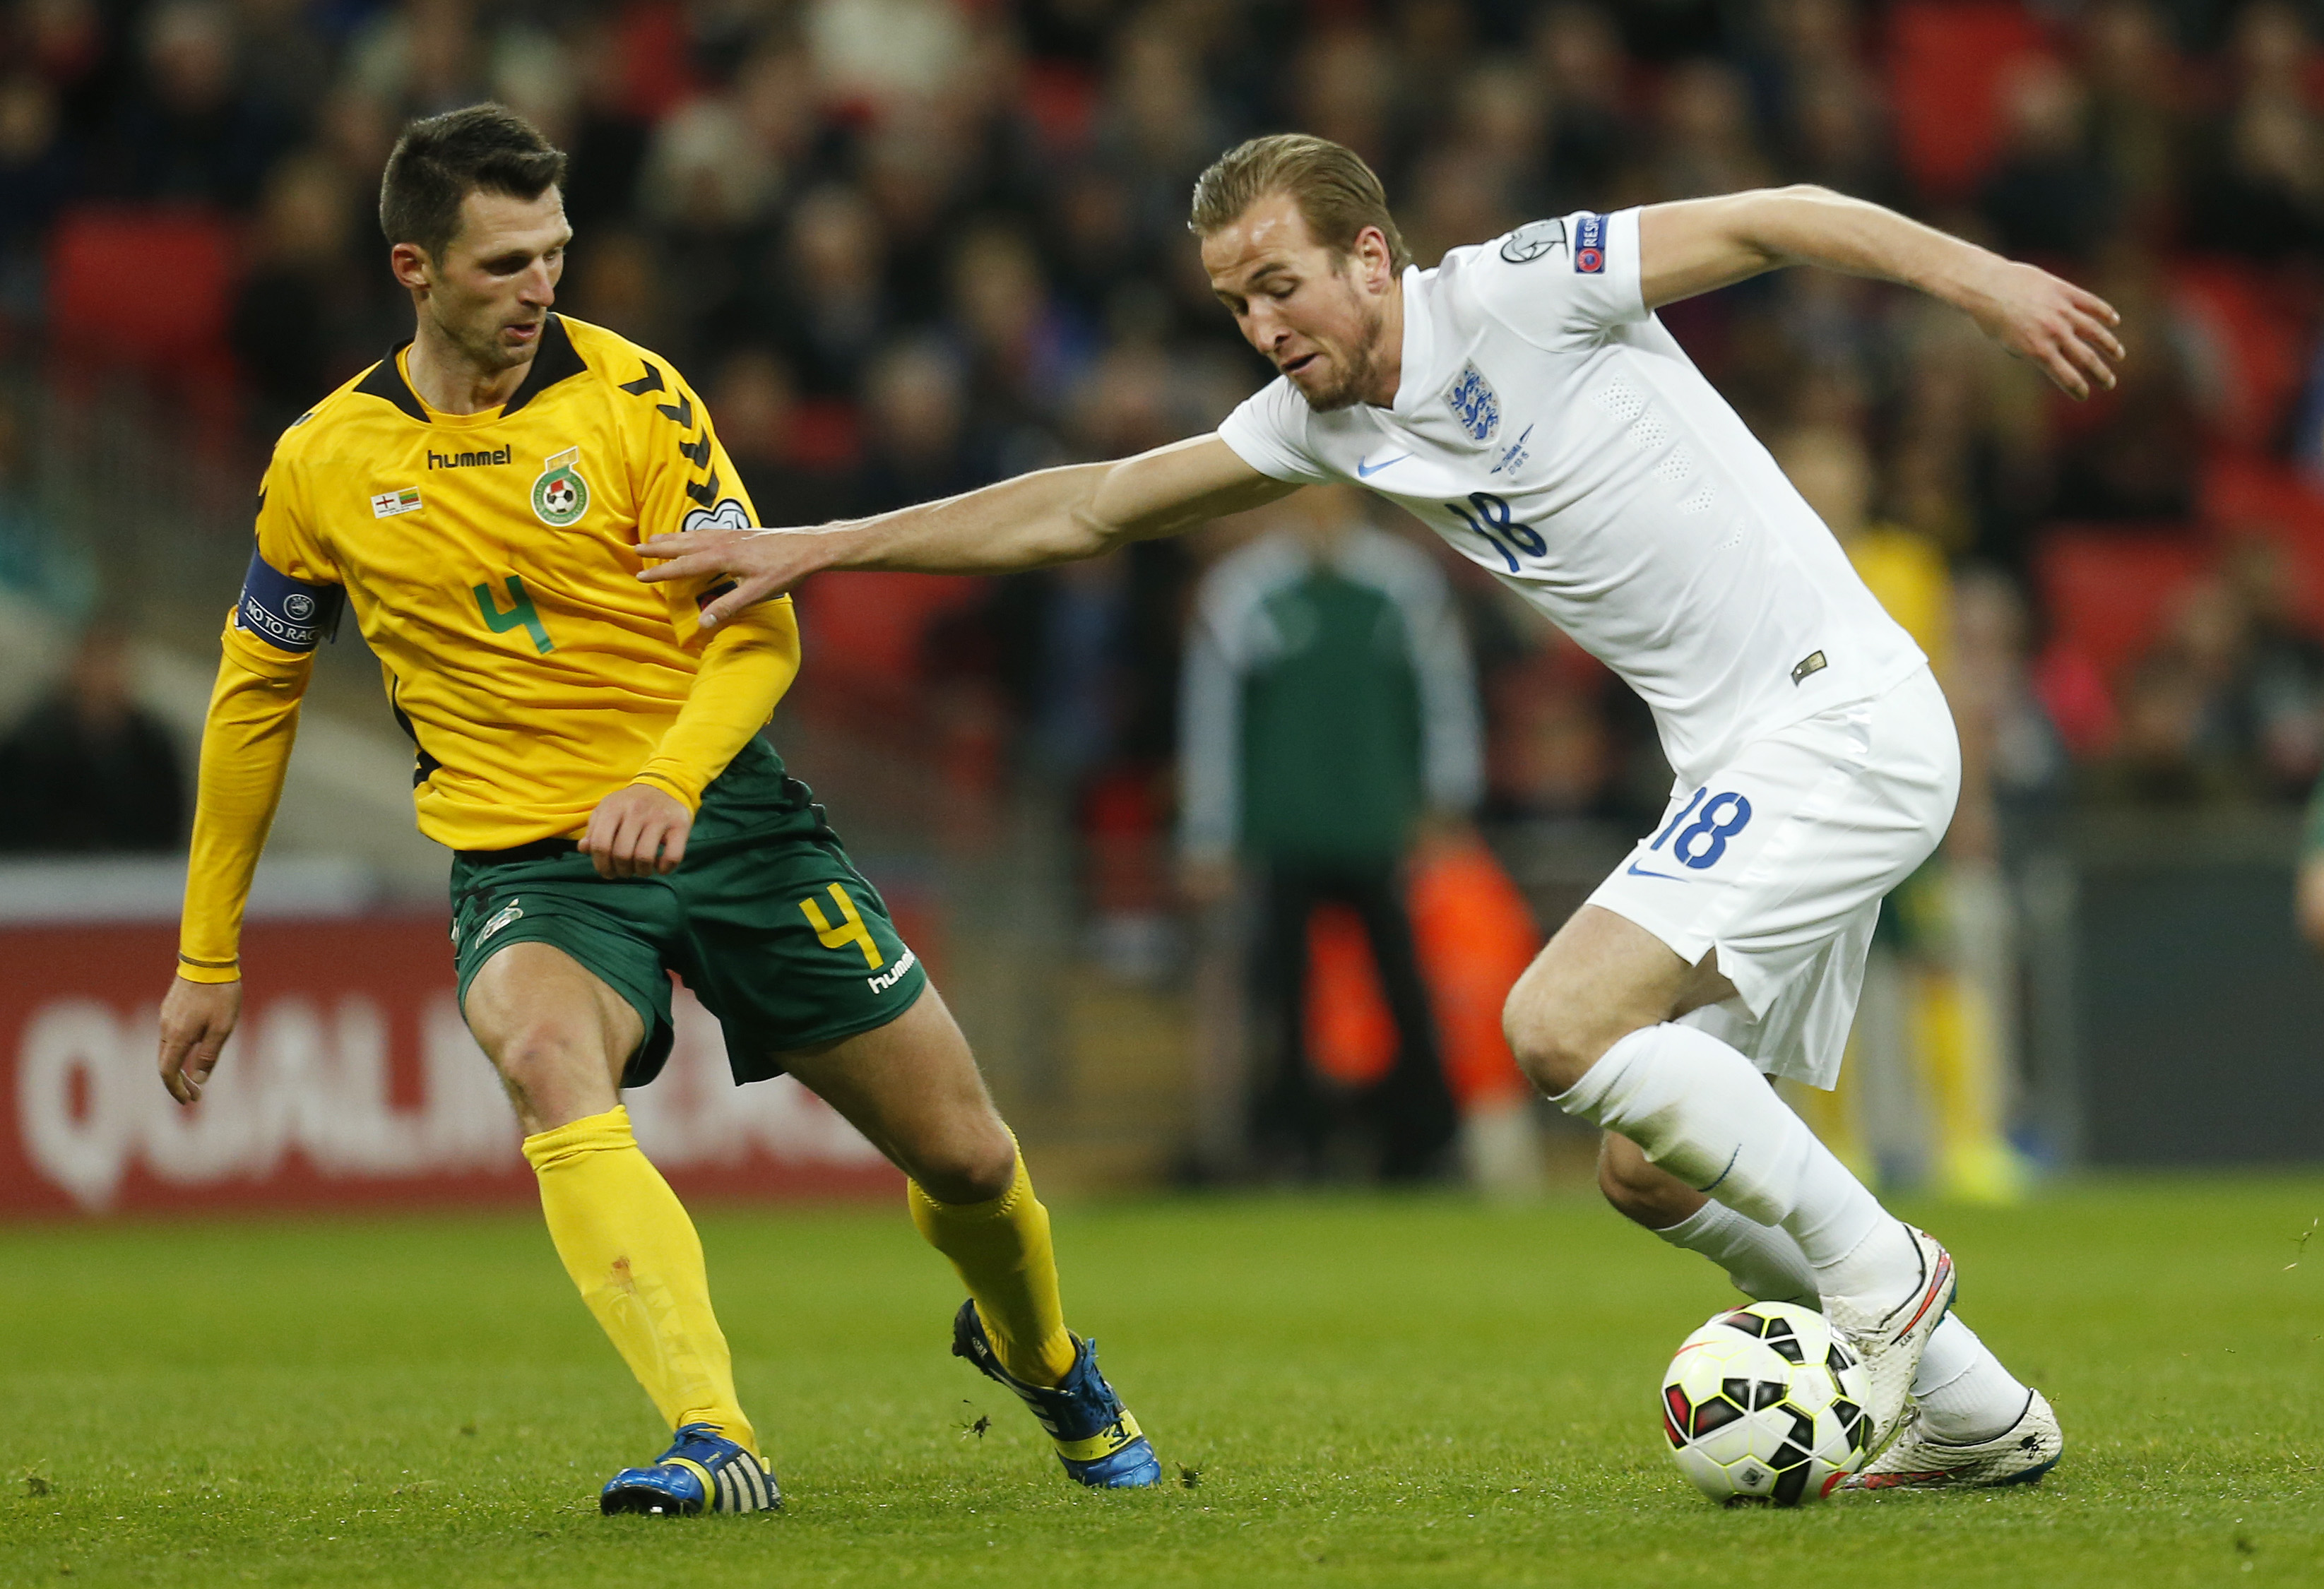 Kane scores on debut as England thrash Lithuania